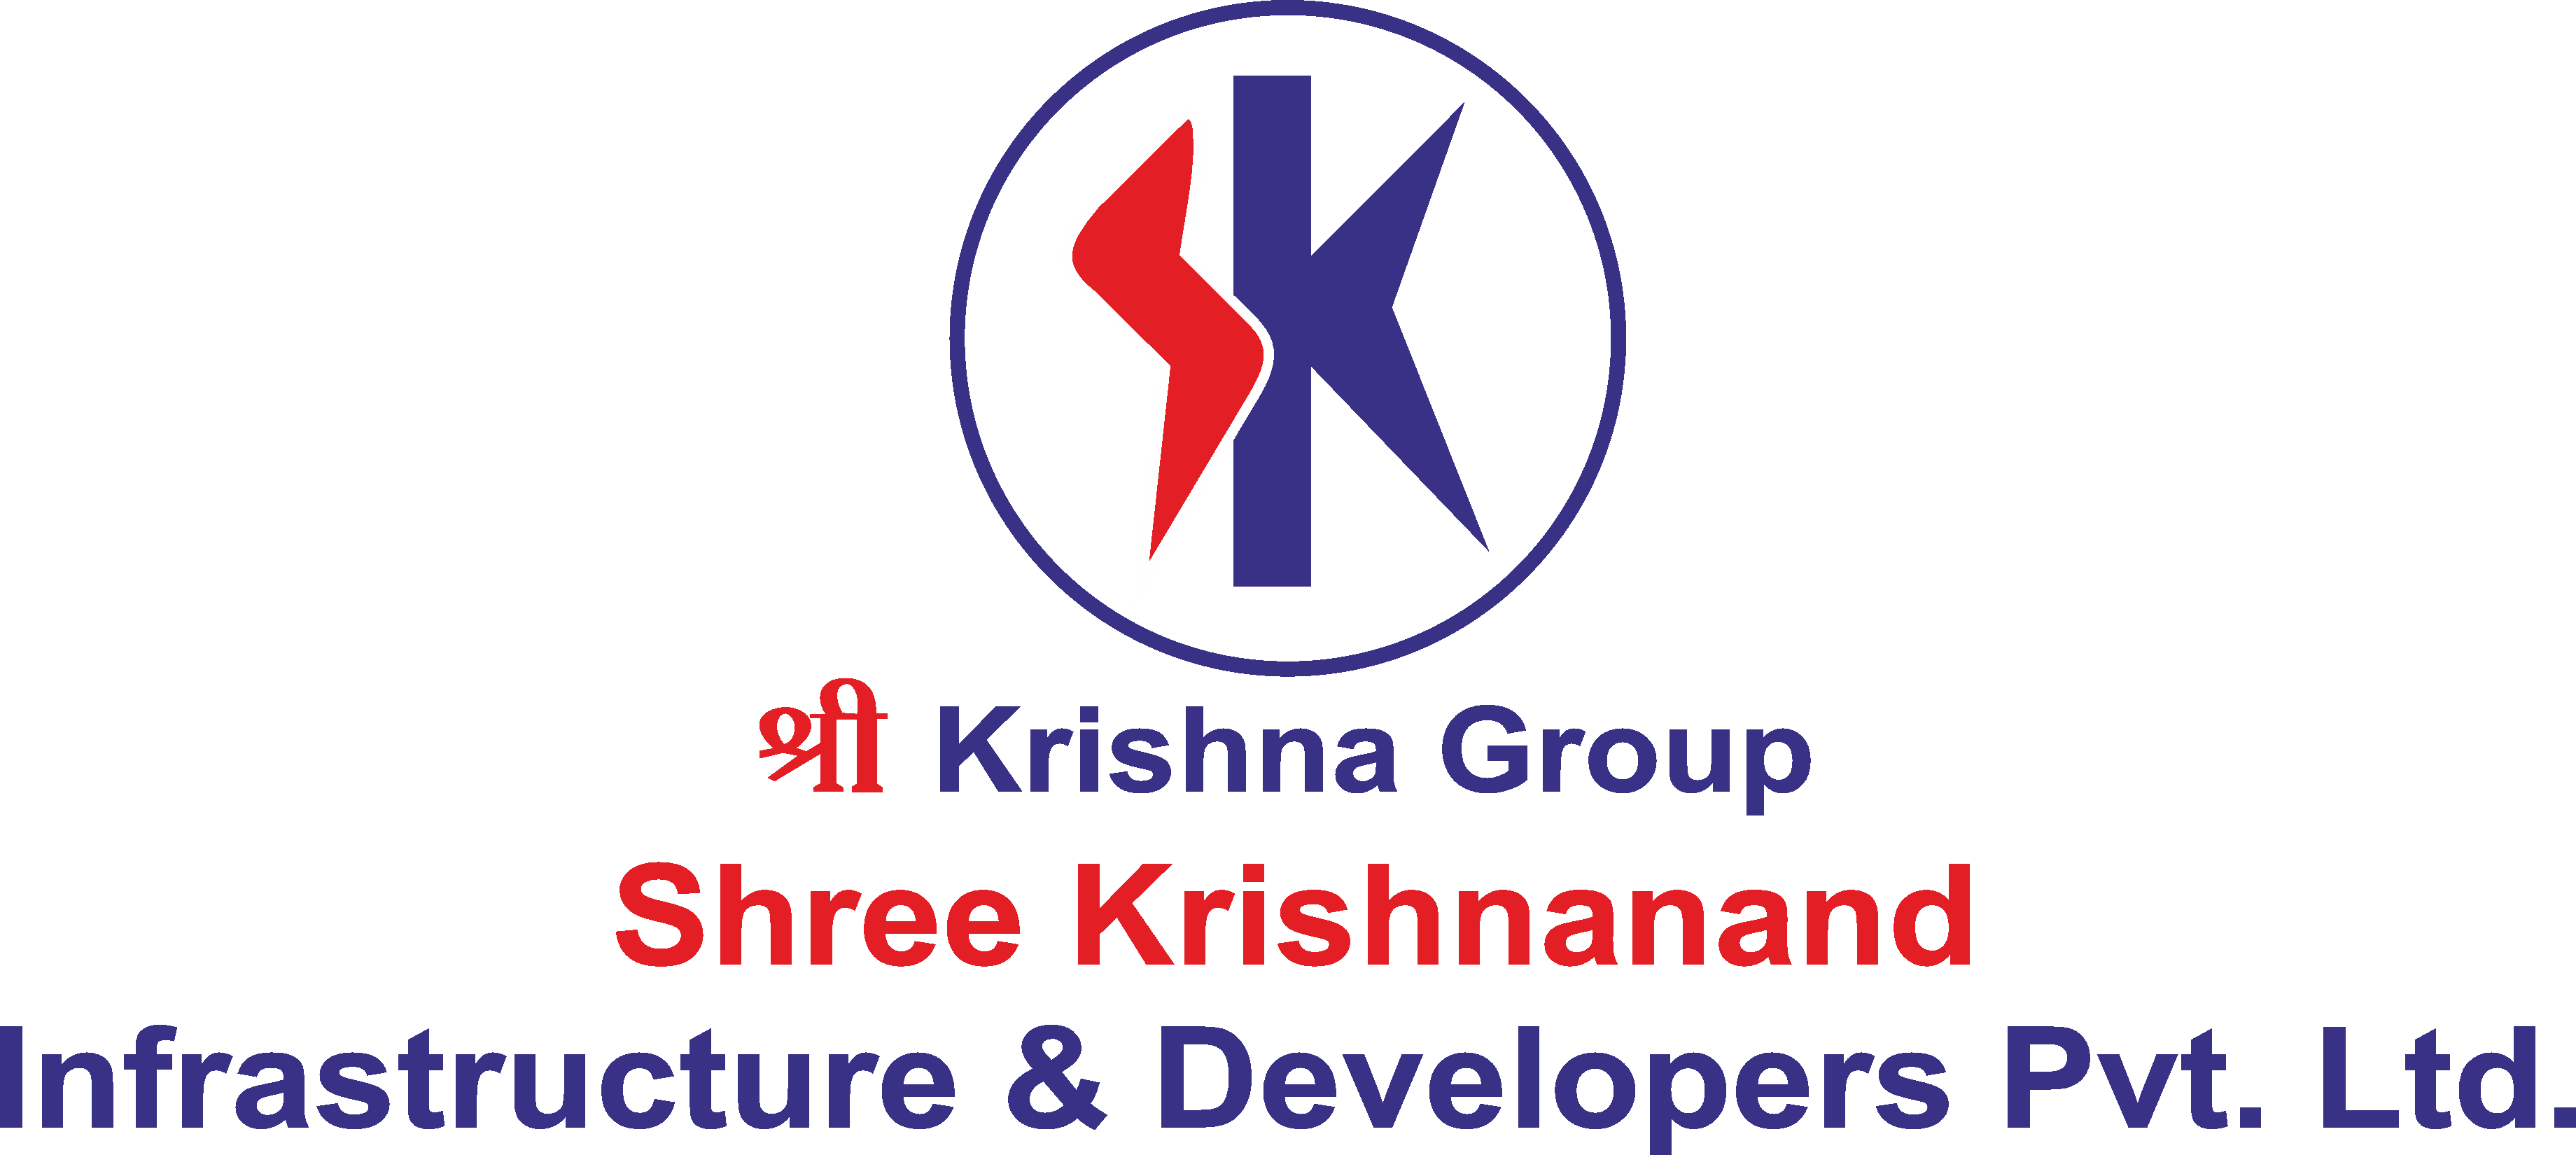 Shri Krishna Vector Art PNG, Jai Shri Krishna, Krishna Png, Krishnasthami,  Lord Krishna PNG Image For Free Download